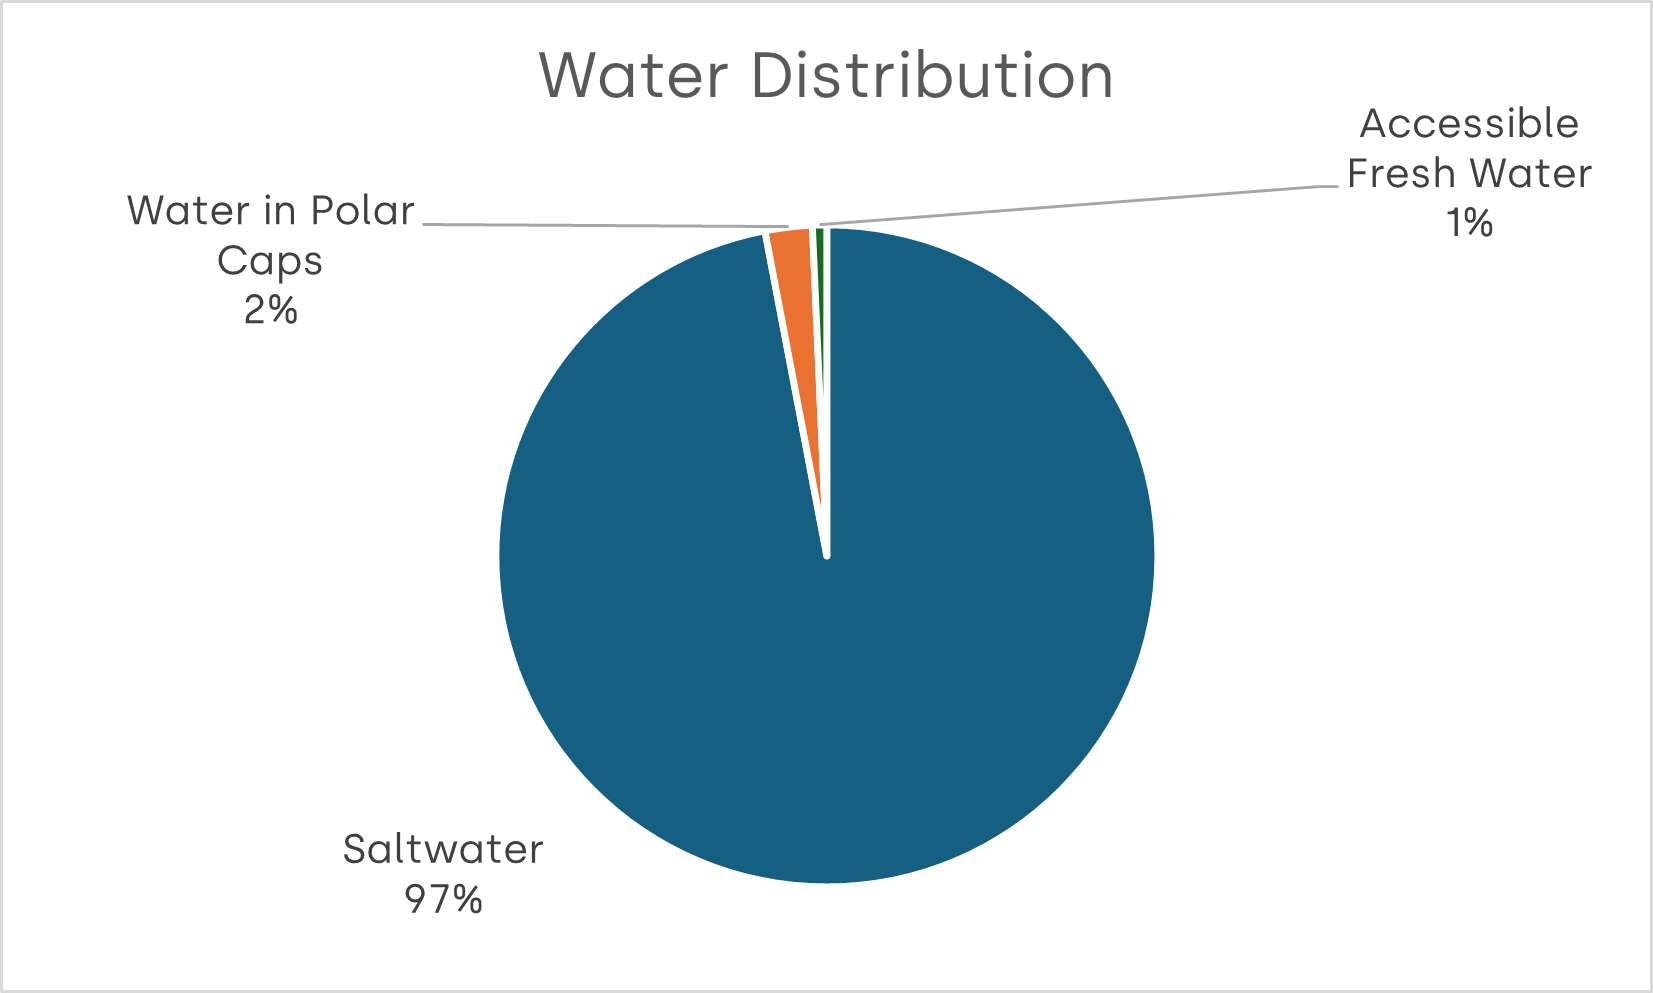 Water Distribution